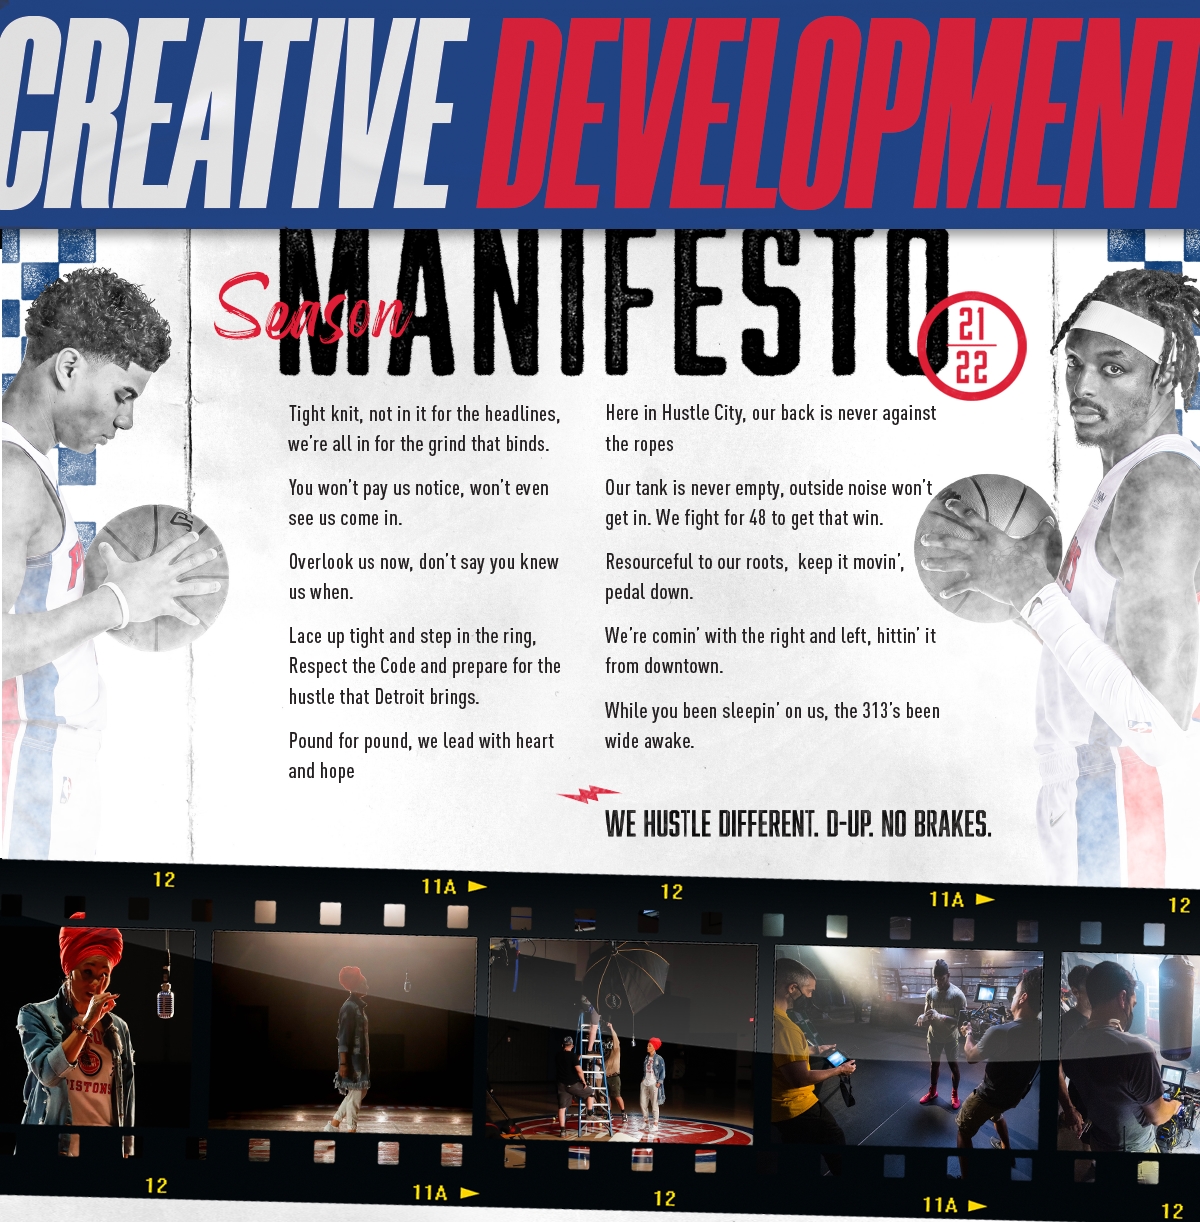 Detroit Pistons 21-22 season campaign marketing manifesto by Creative Director Justin Winget